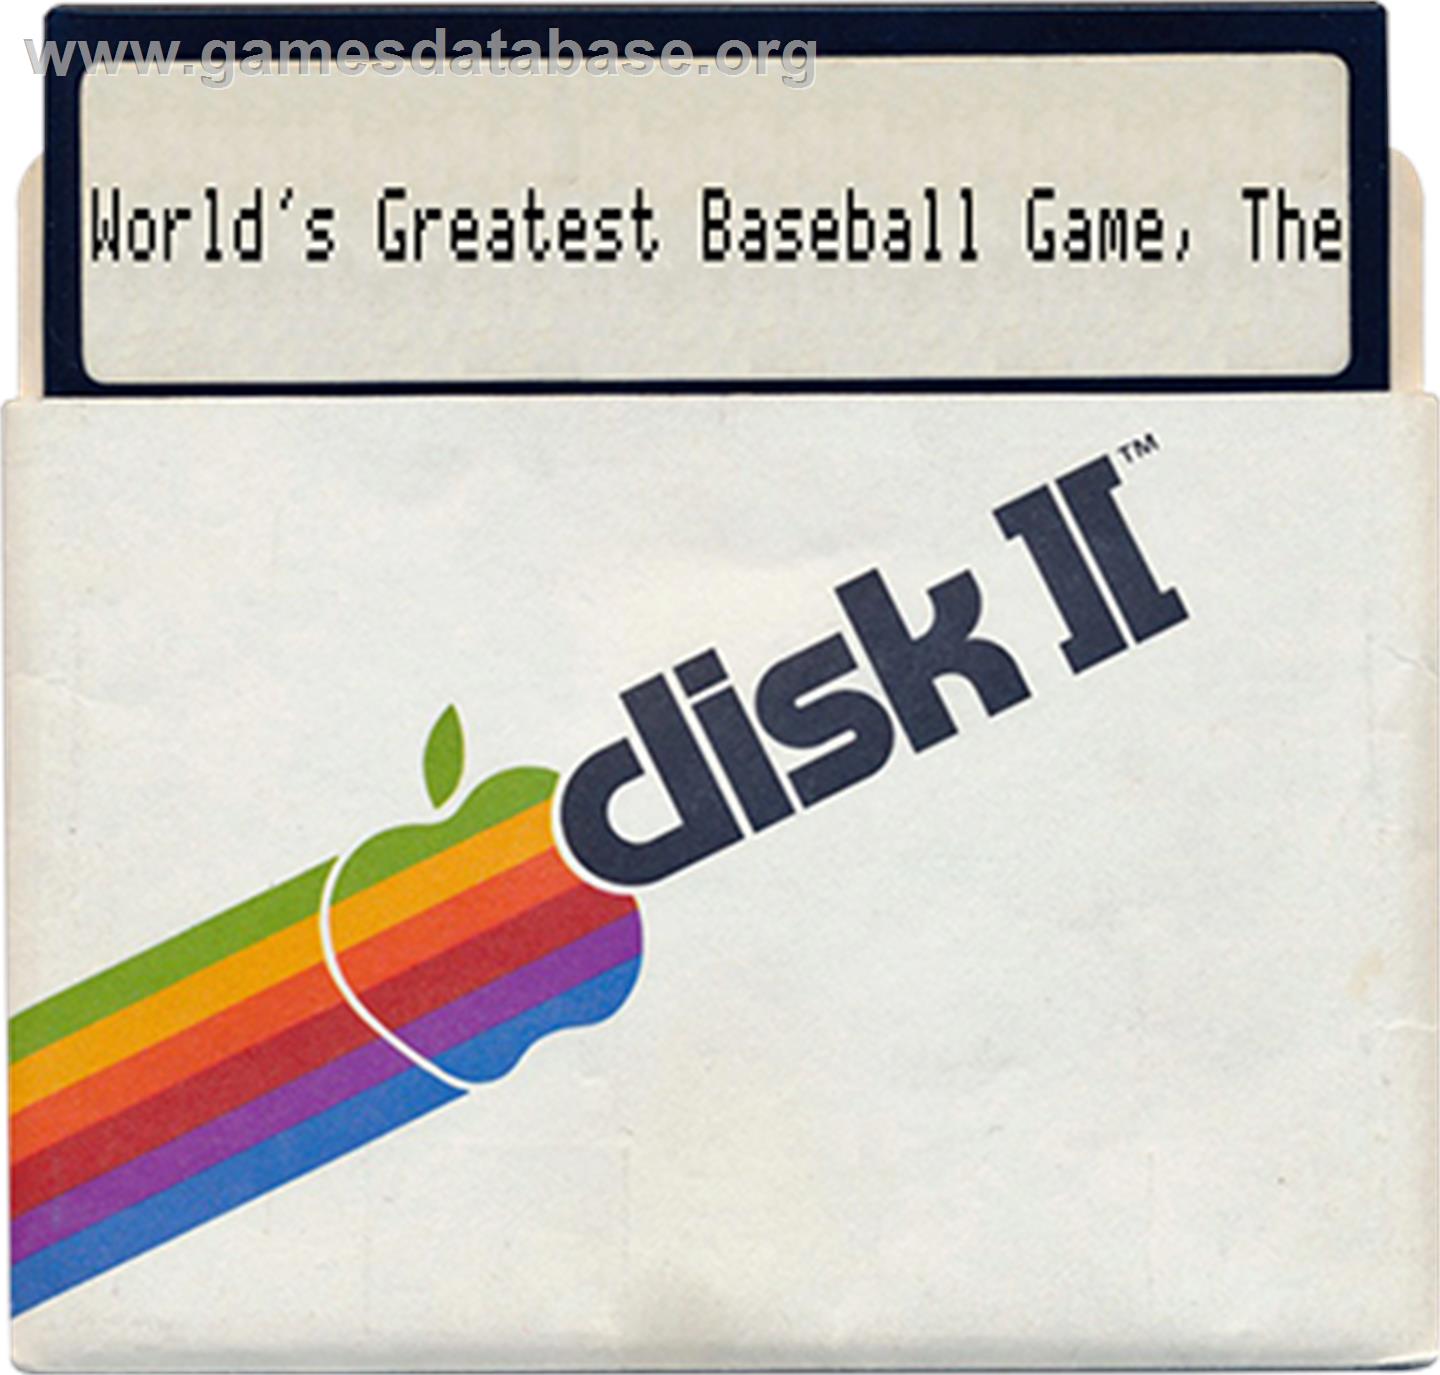 World's Greatest Baseball Game - Apple II - Artwork - Disc